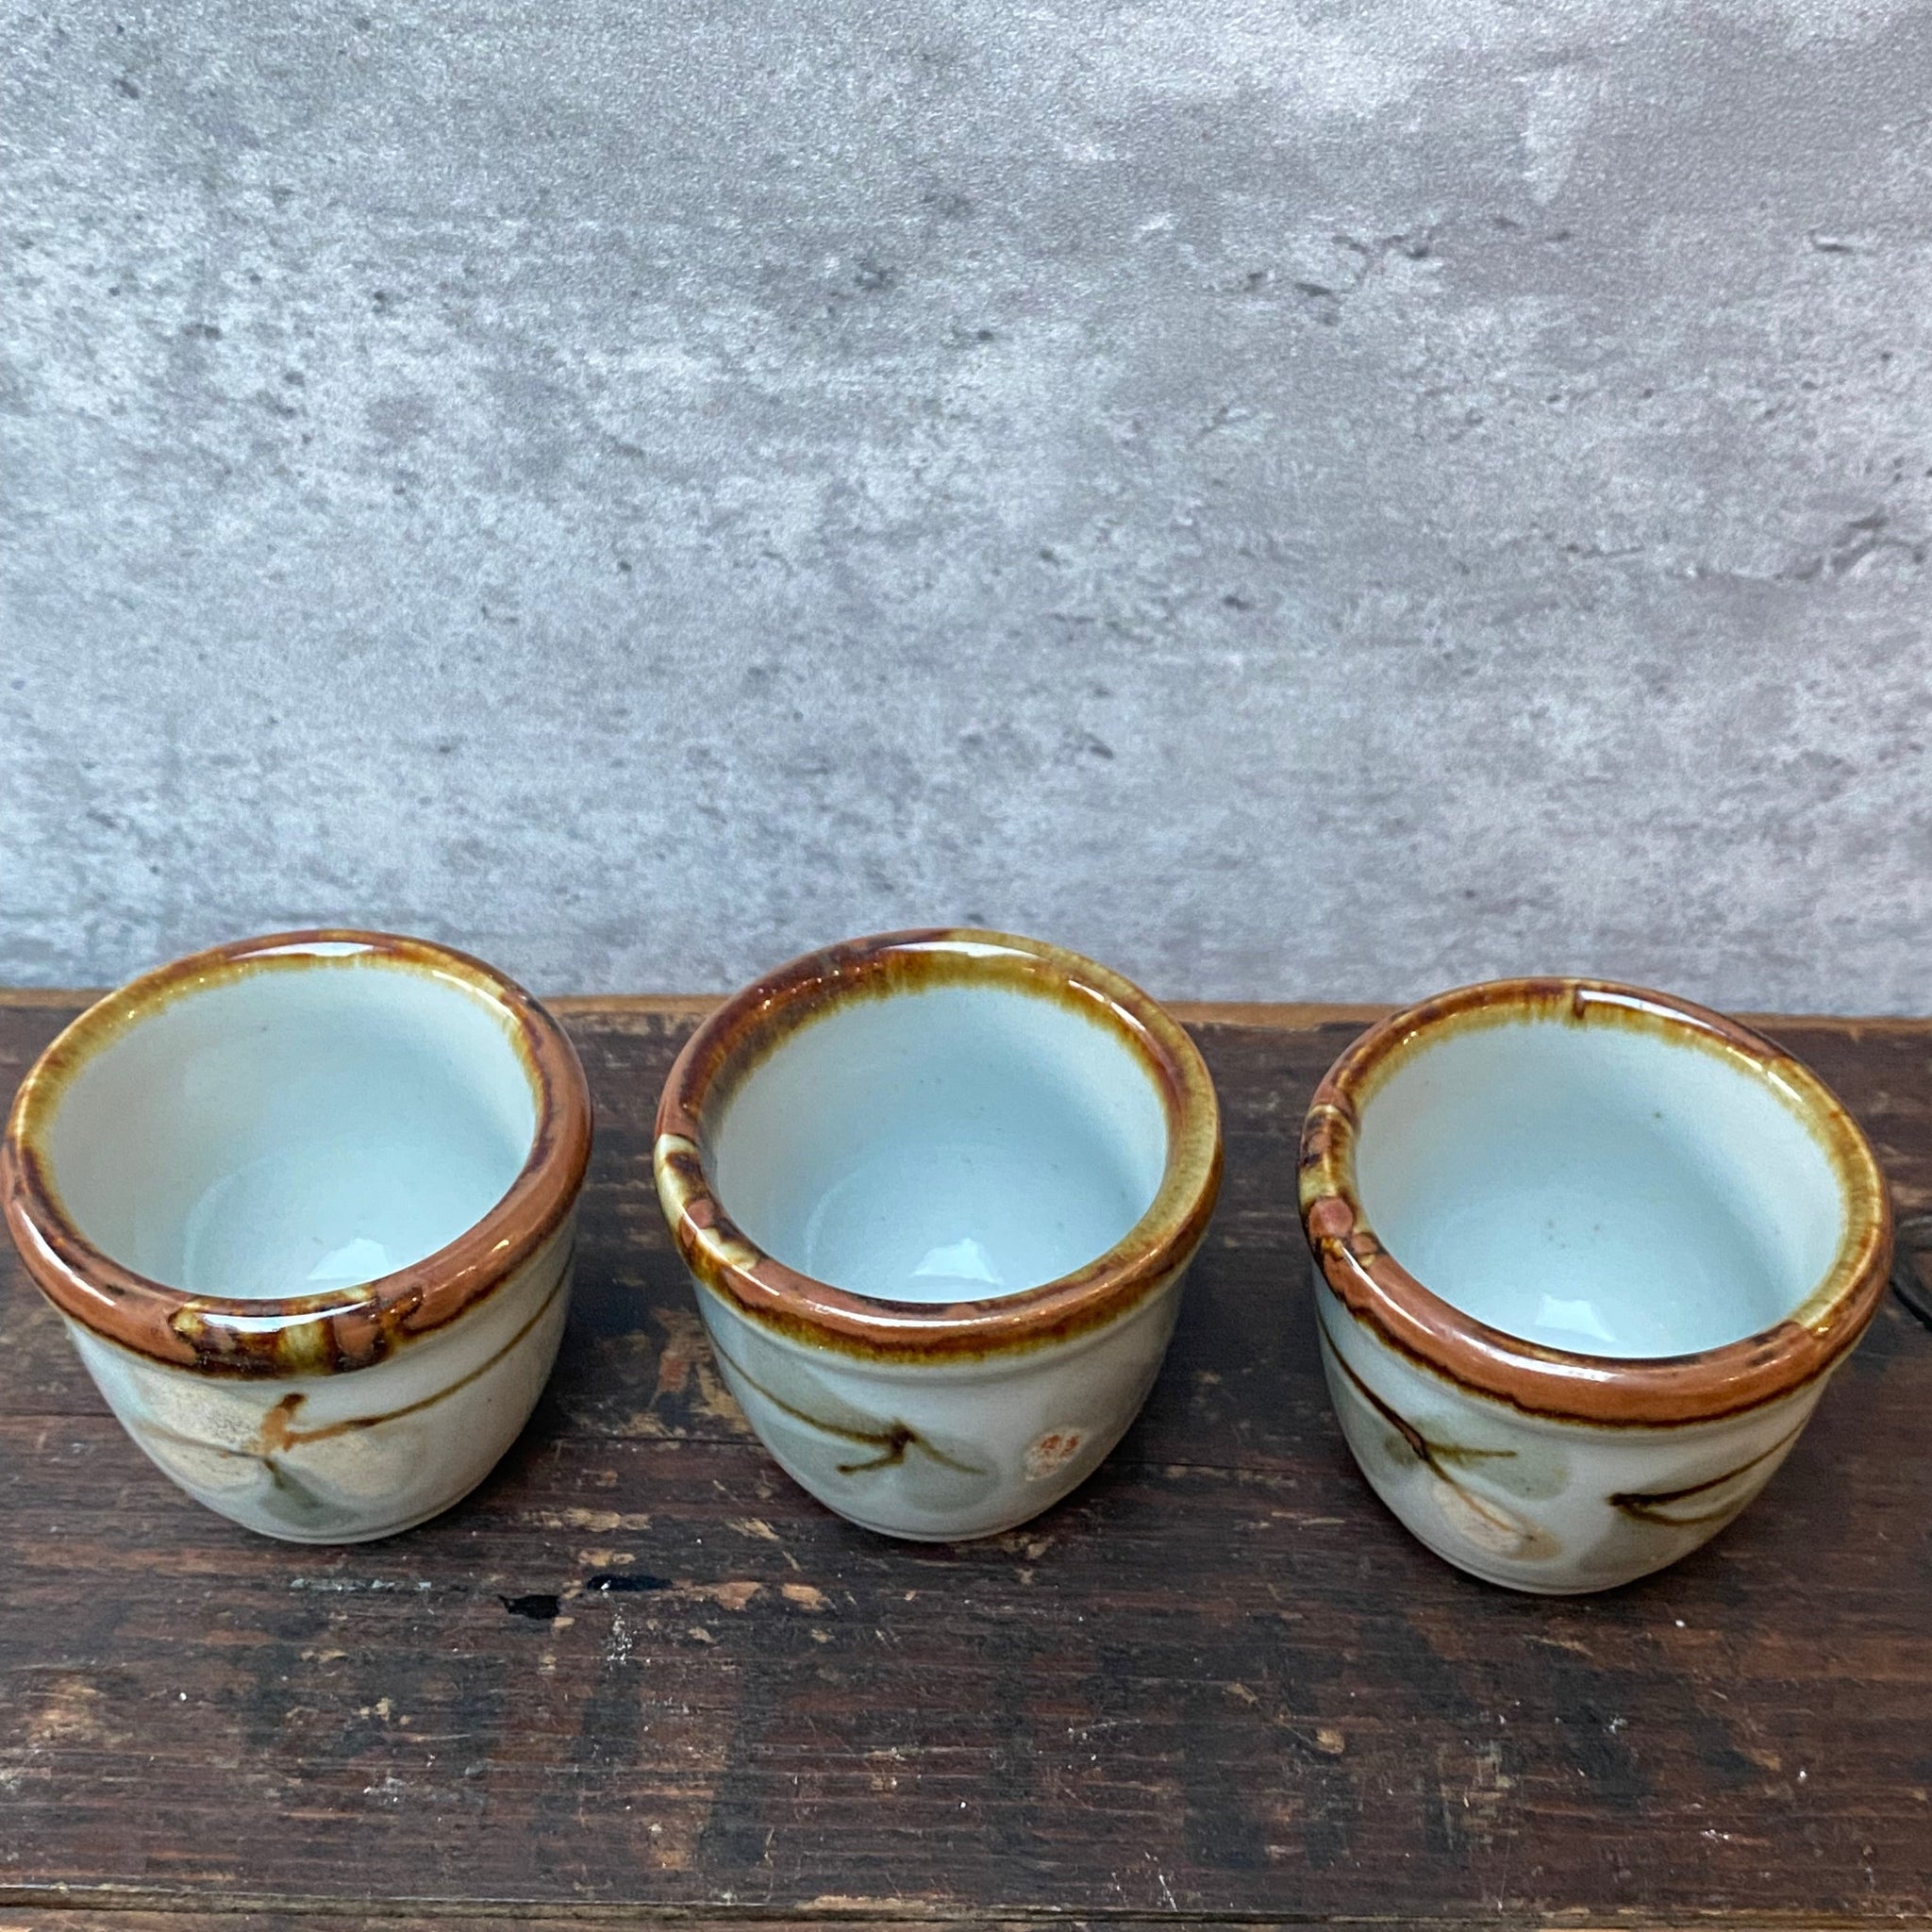 Vintage Mid Century Tiny Salt and Pepper Shakers Ceramic Blue 